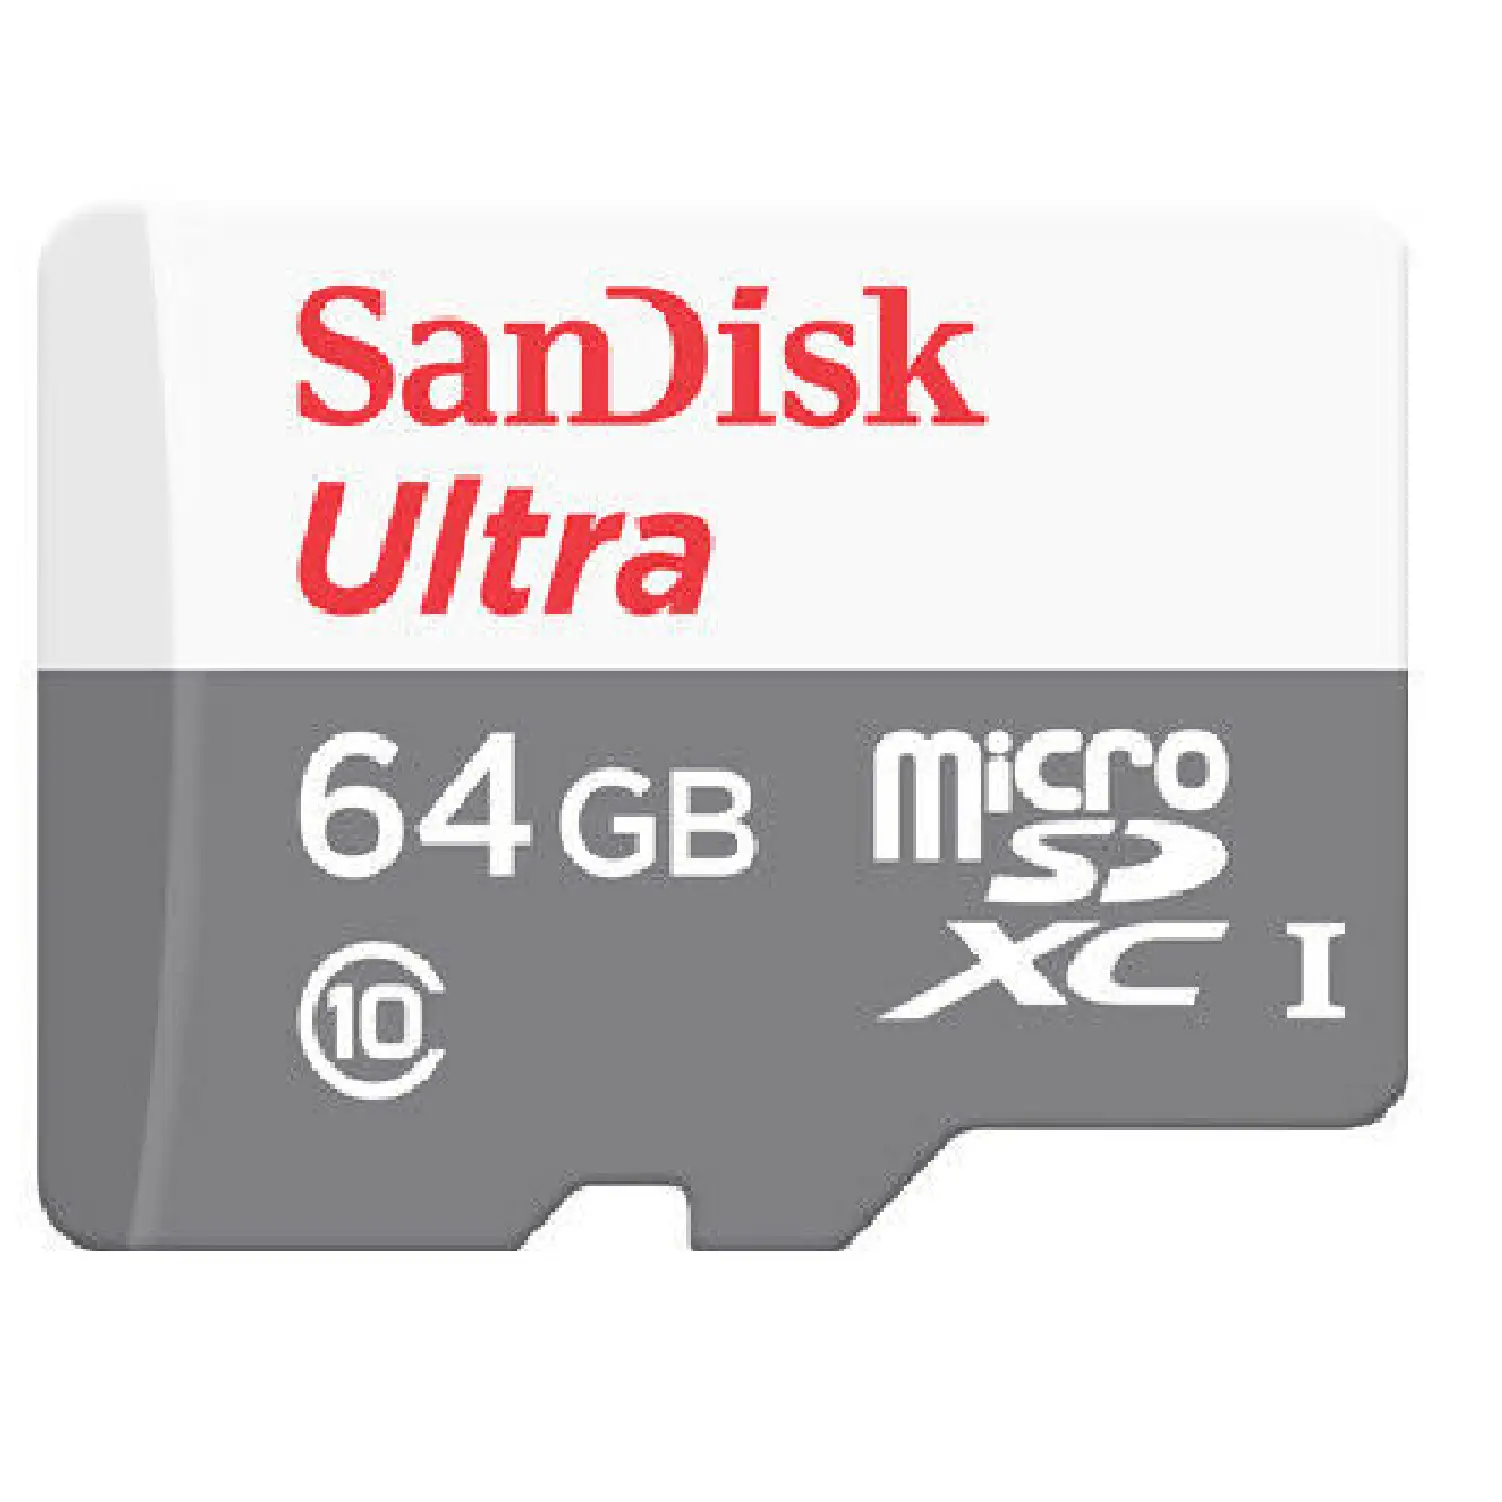 Carte microSDXC SanDisk 128 GB - Nintendo Switch - Achat jeux video Maroc 